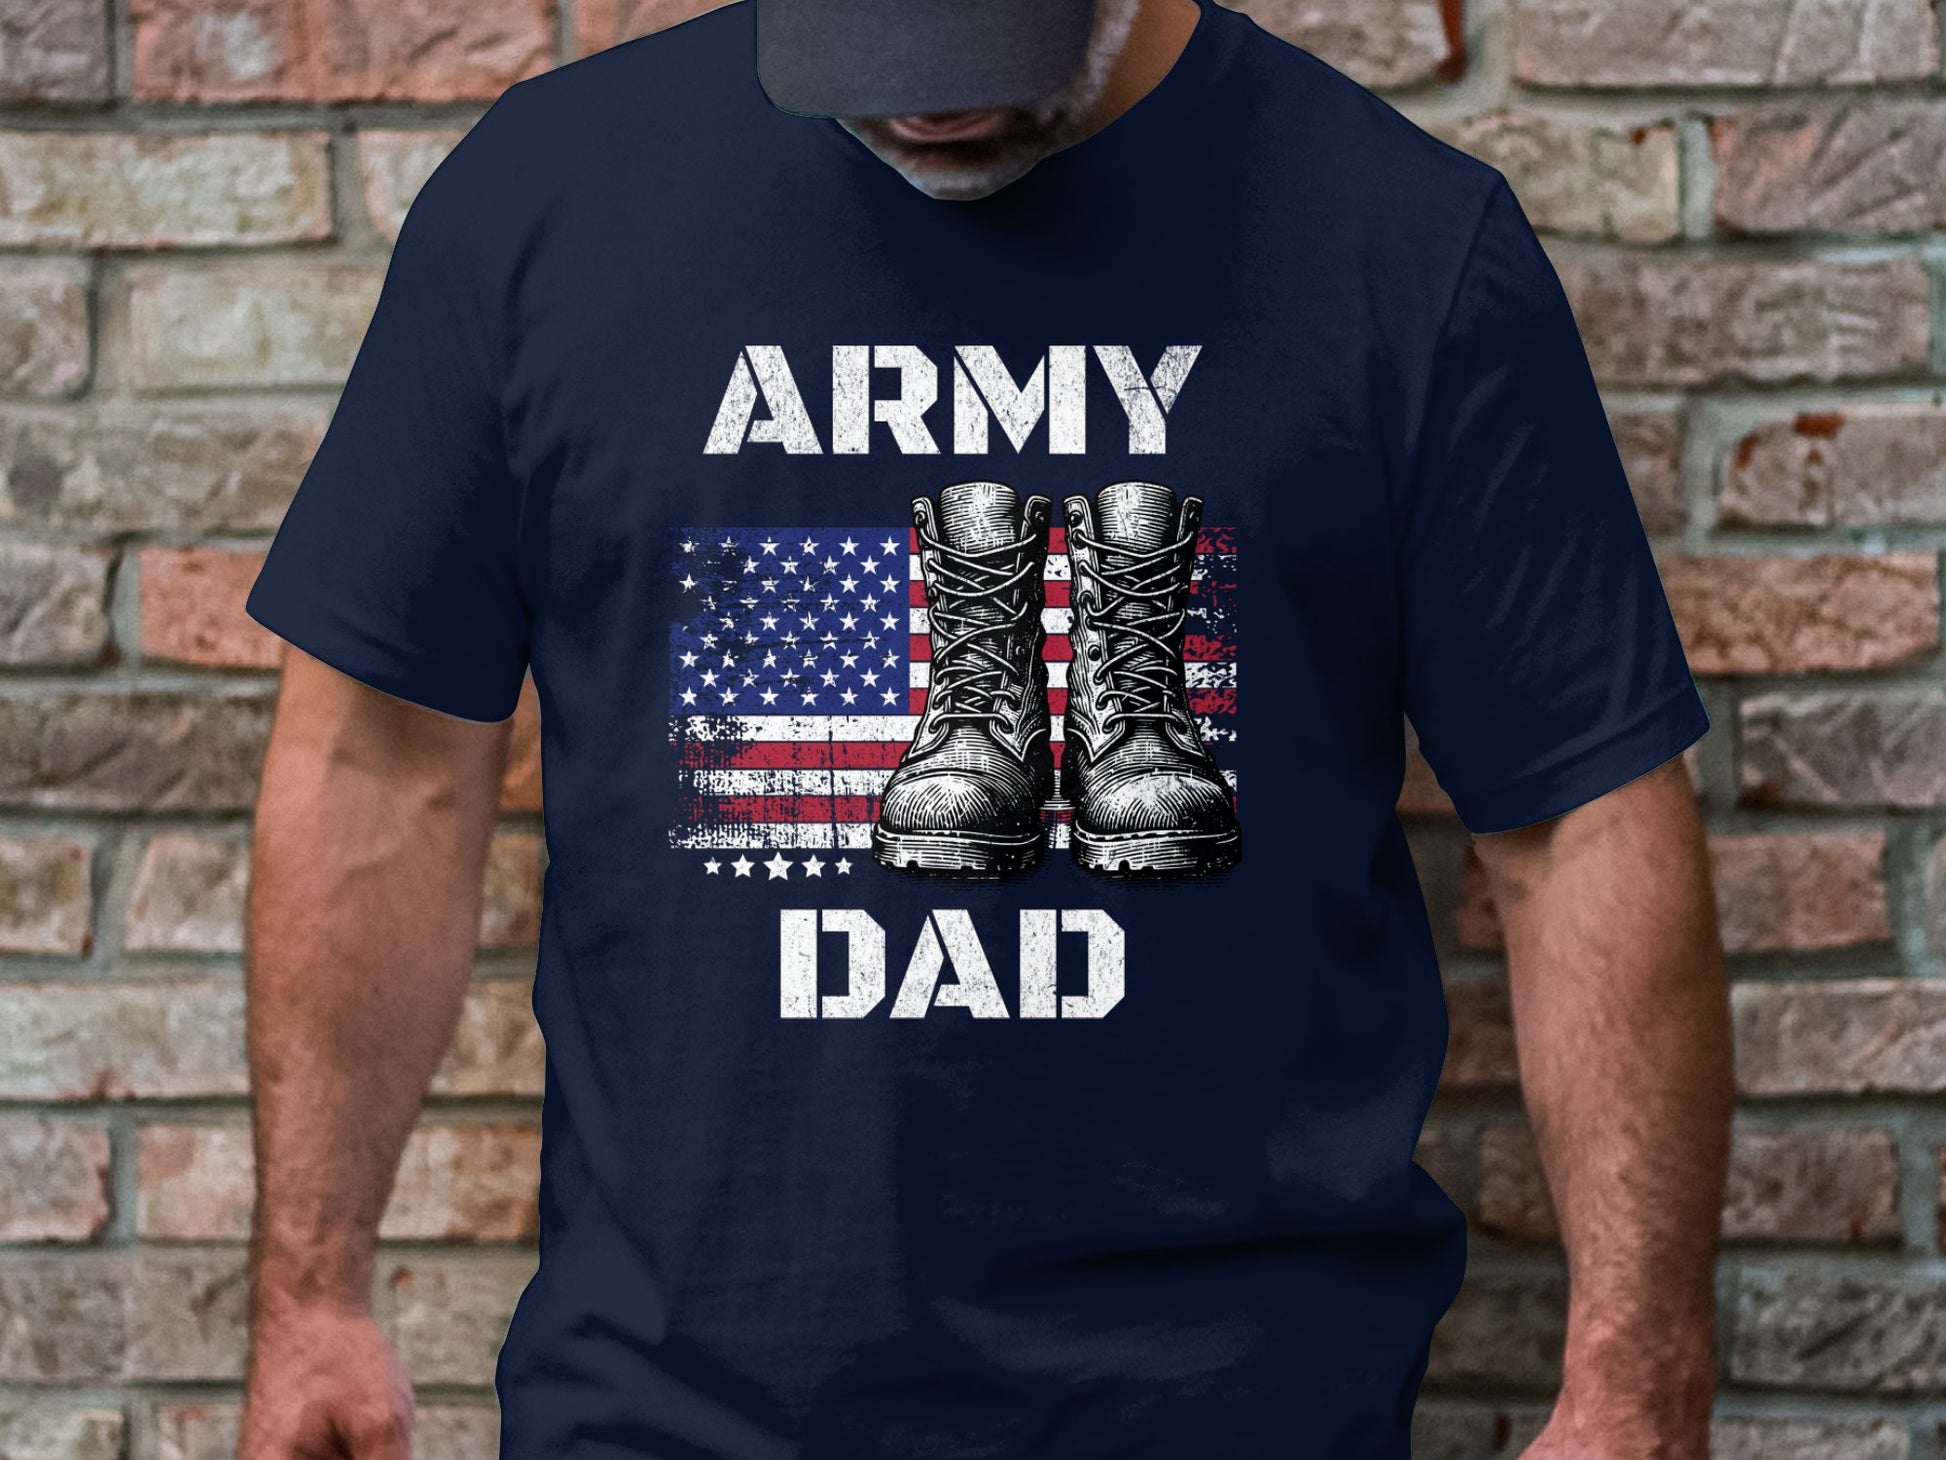 Army Dad Vintage American Flag and Boots T-Shirt, Patriotic Military Shirt - Mardonyx T-Shirt XS / Black